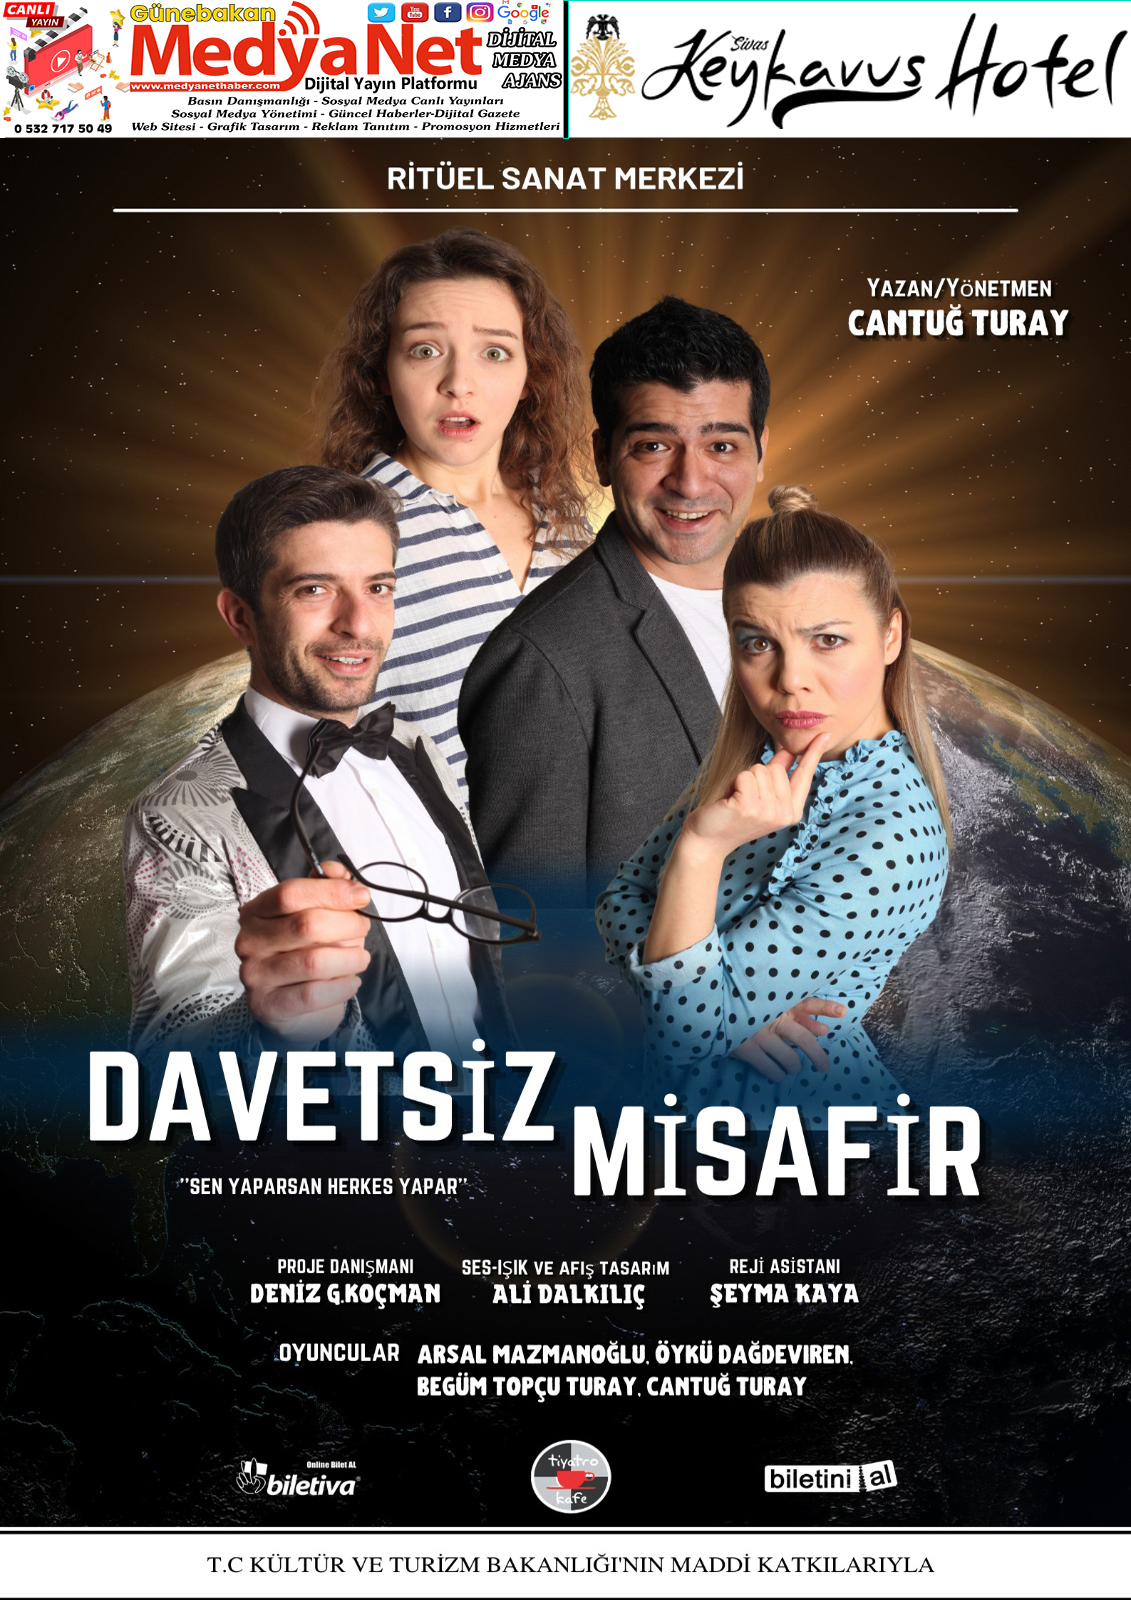 Davetsiz Misafir Tiyatro Oyunu 25 Şubat’ta Sivas’ta